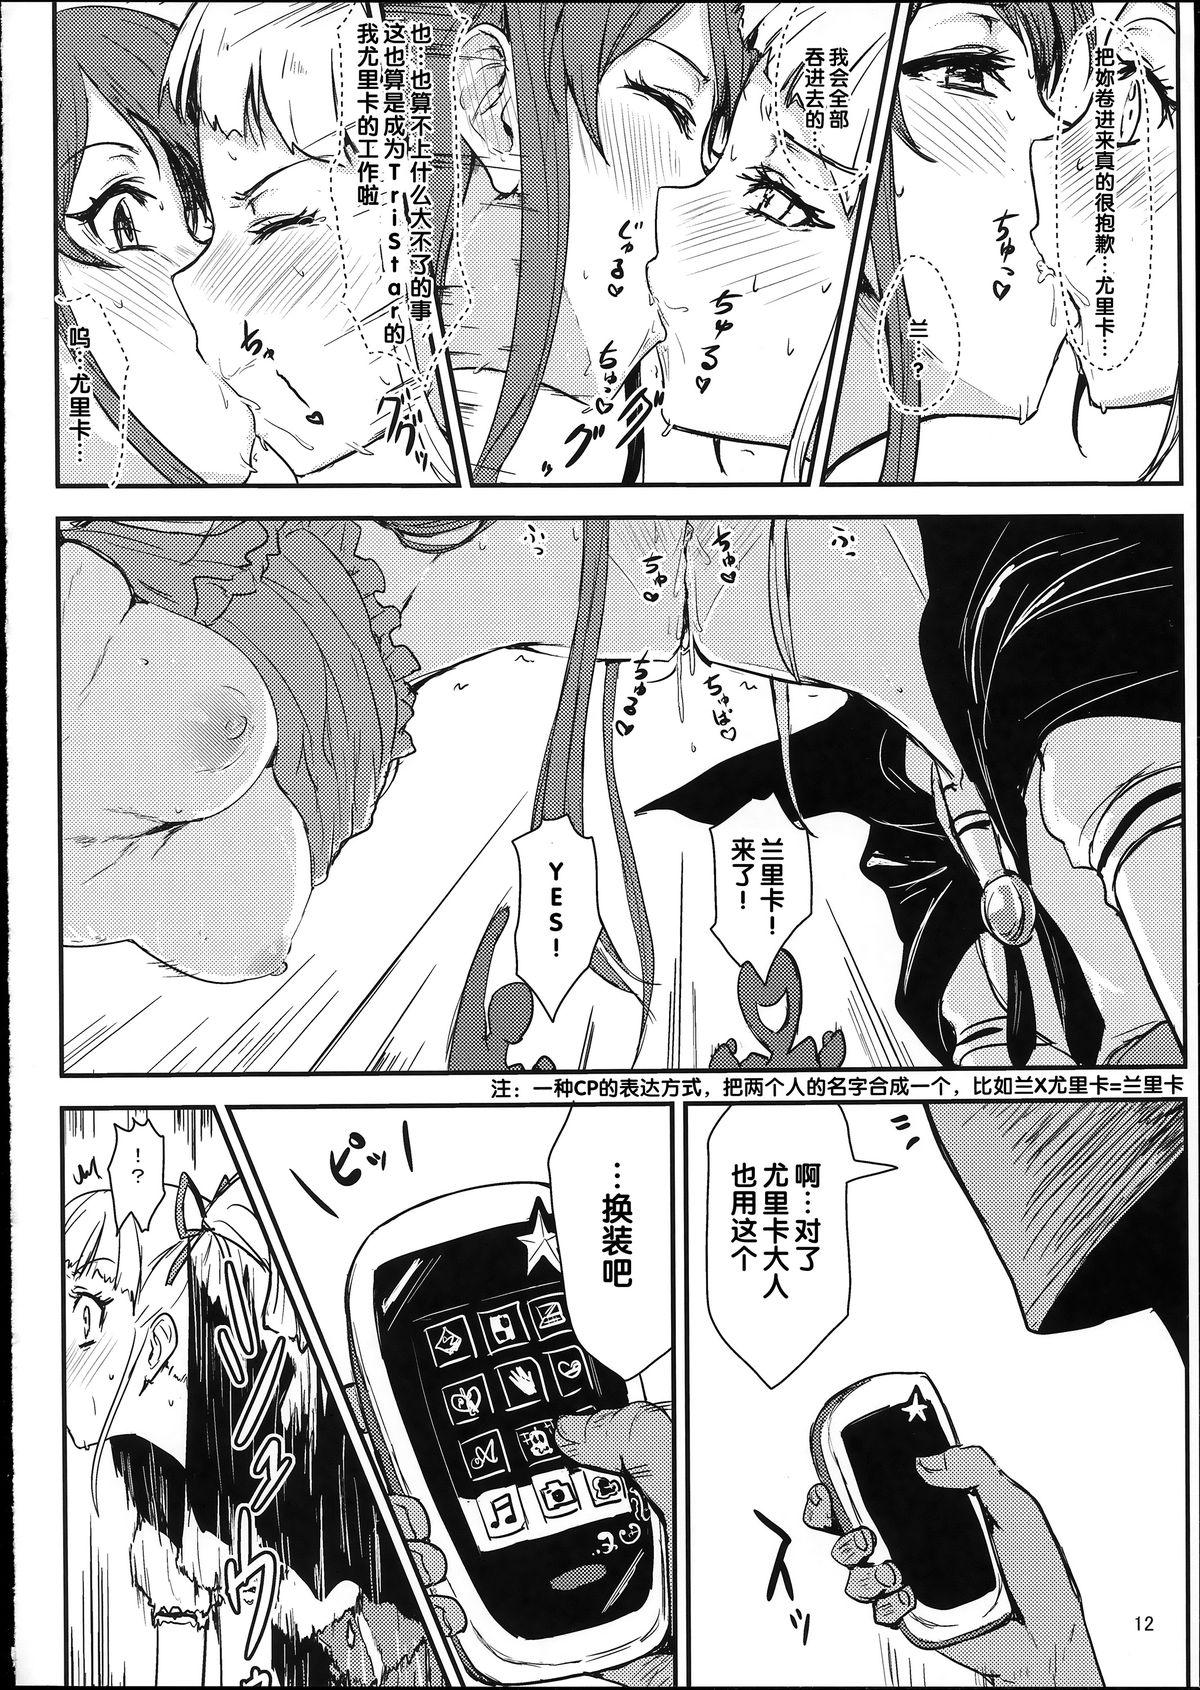 Longhair Soreyuke tristar - Aikatsu Publico - Page 11